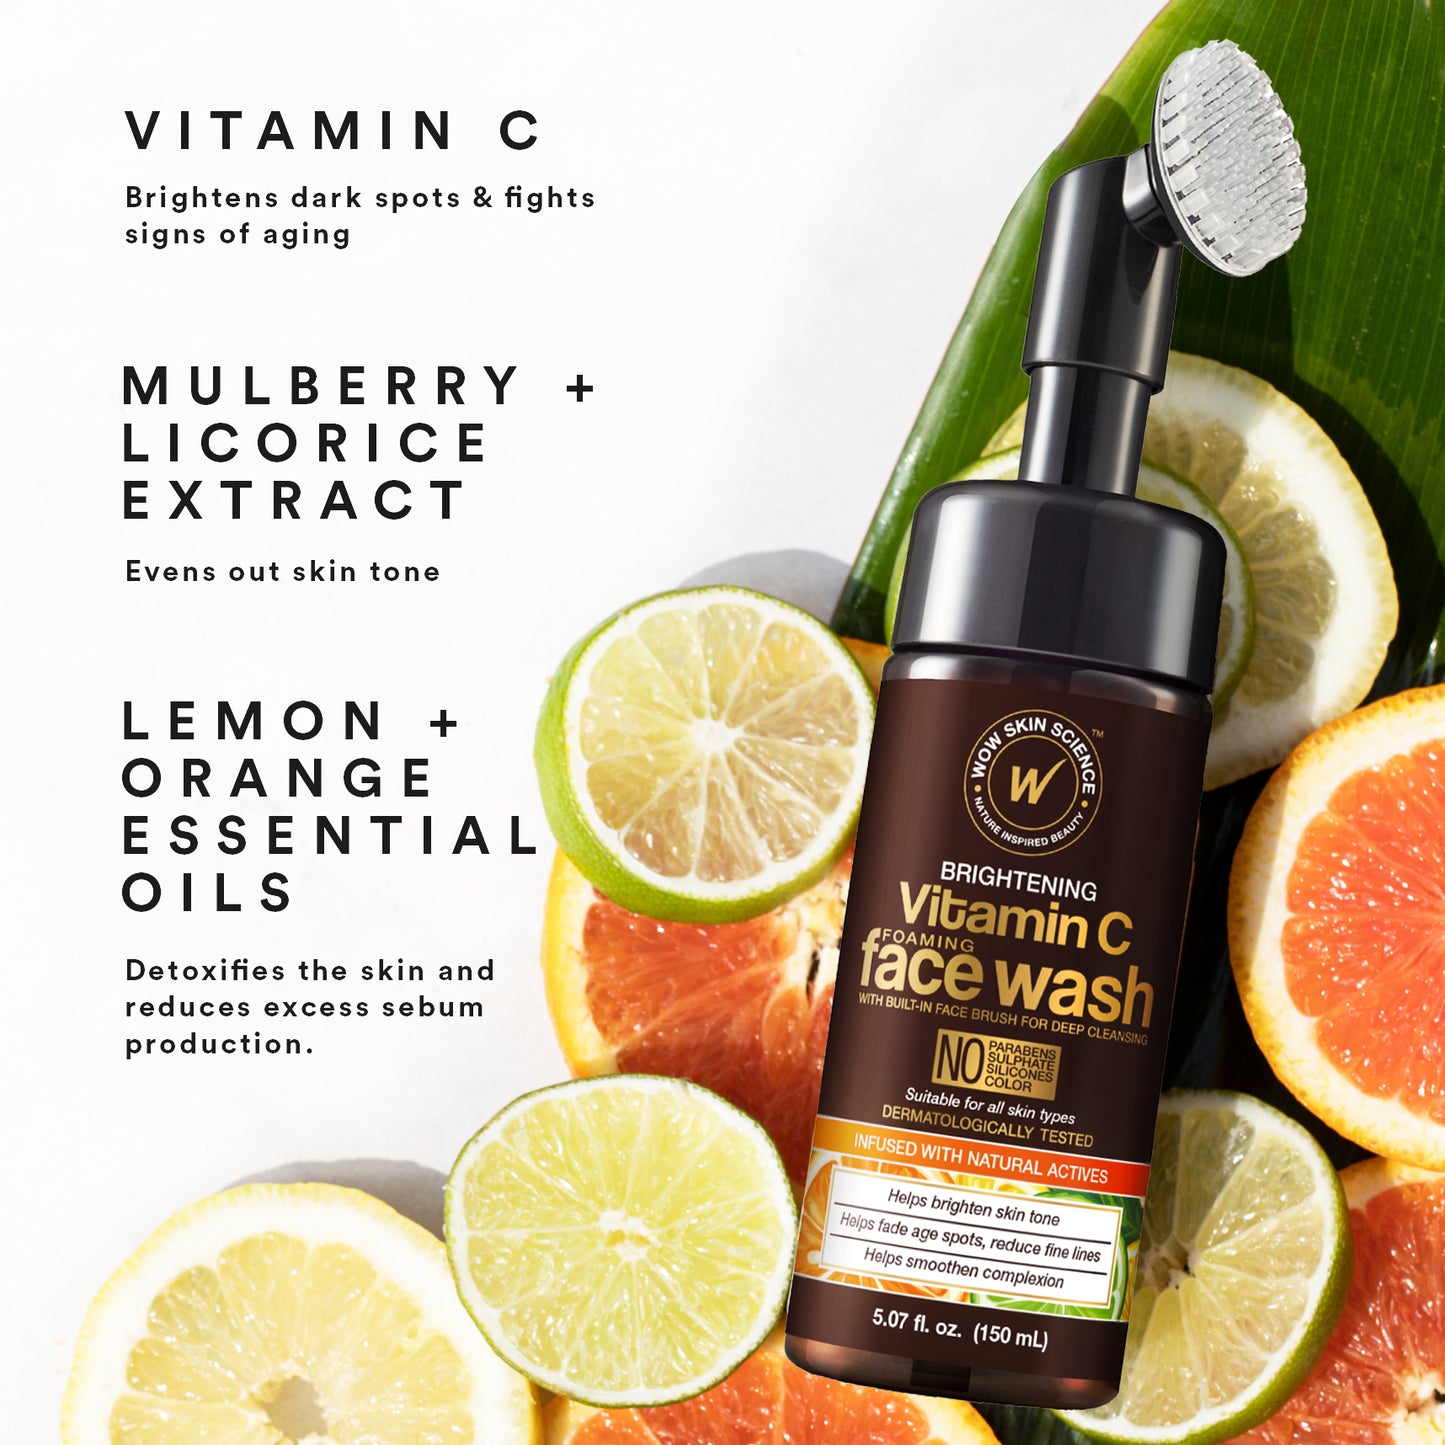 WOW Skin Science Vitamin C Face Wash & Brush 5.07 oz